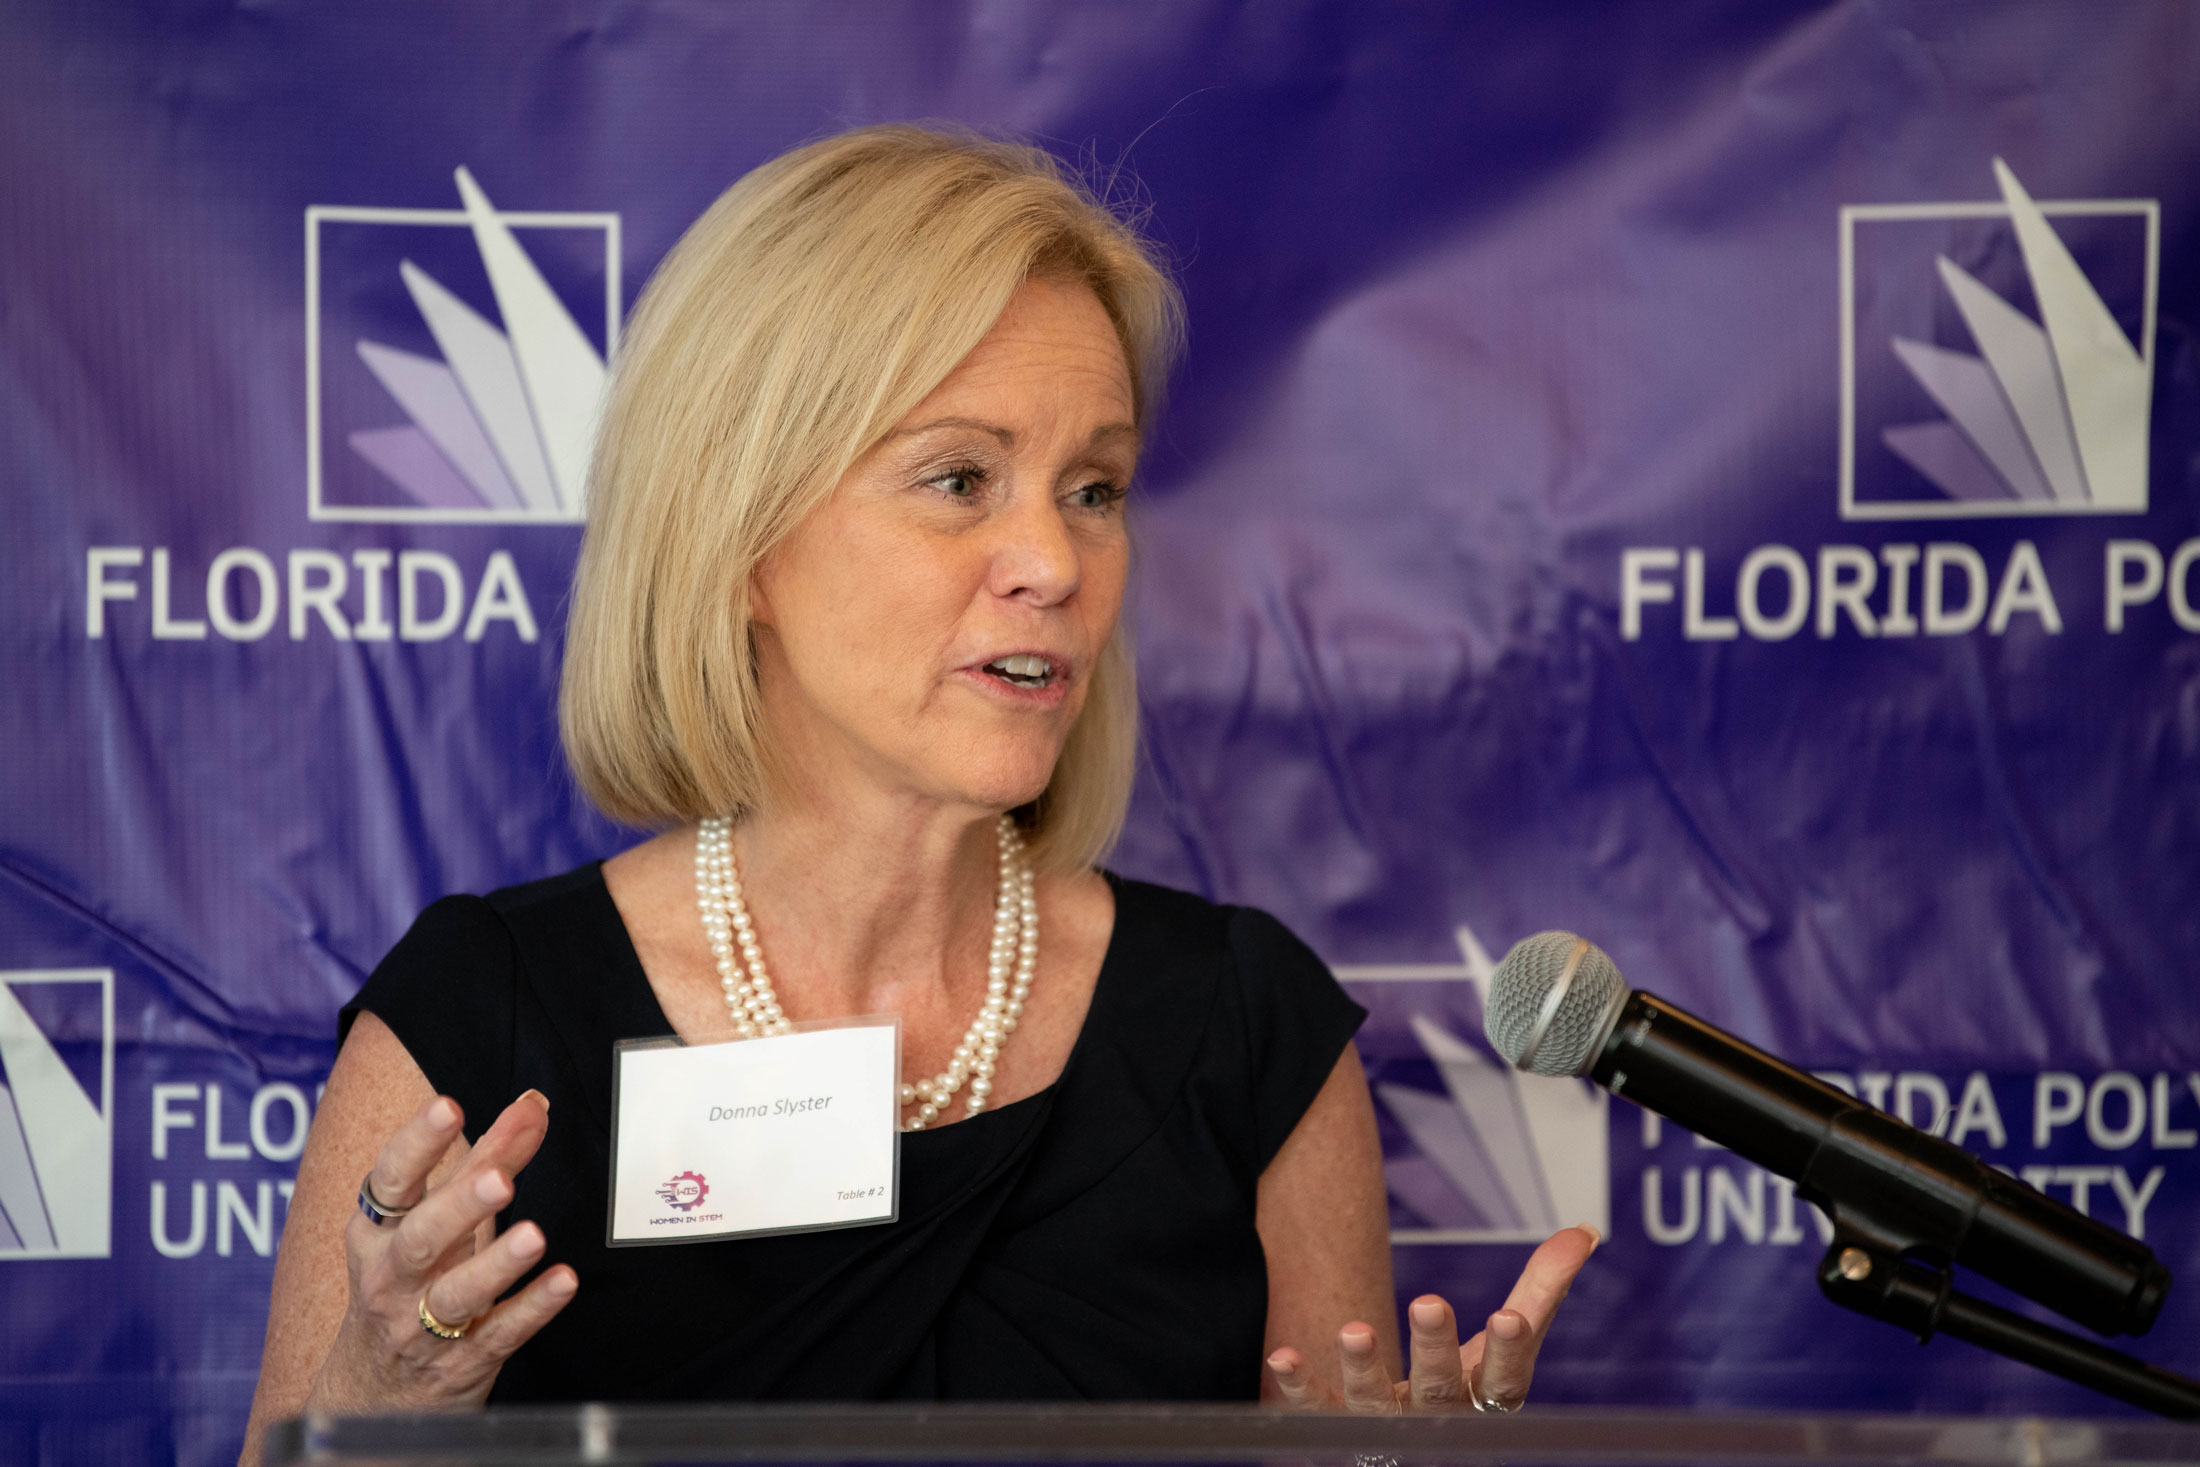 Donna Slyster speaks at Florida Polytechnic University’s Women in STEM Awards luncheon.